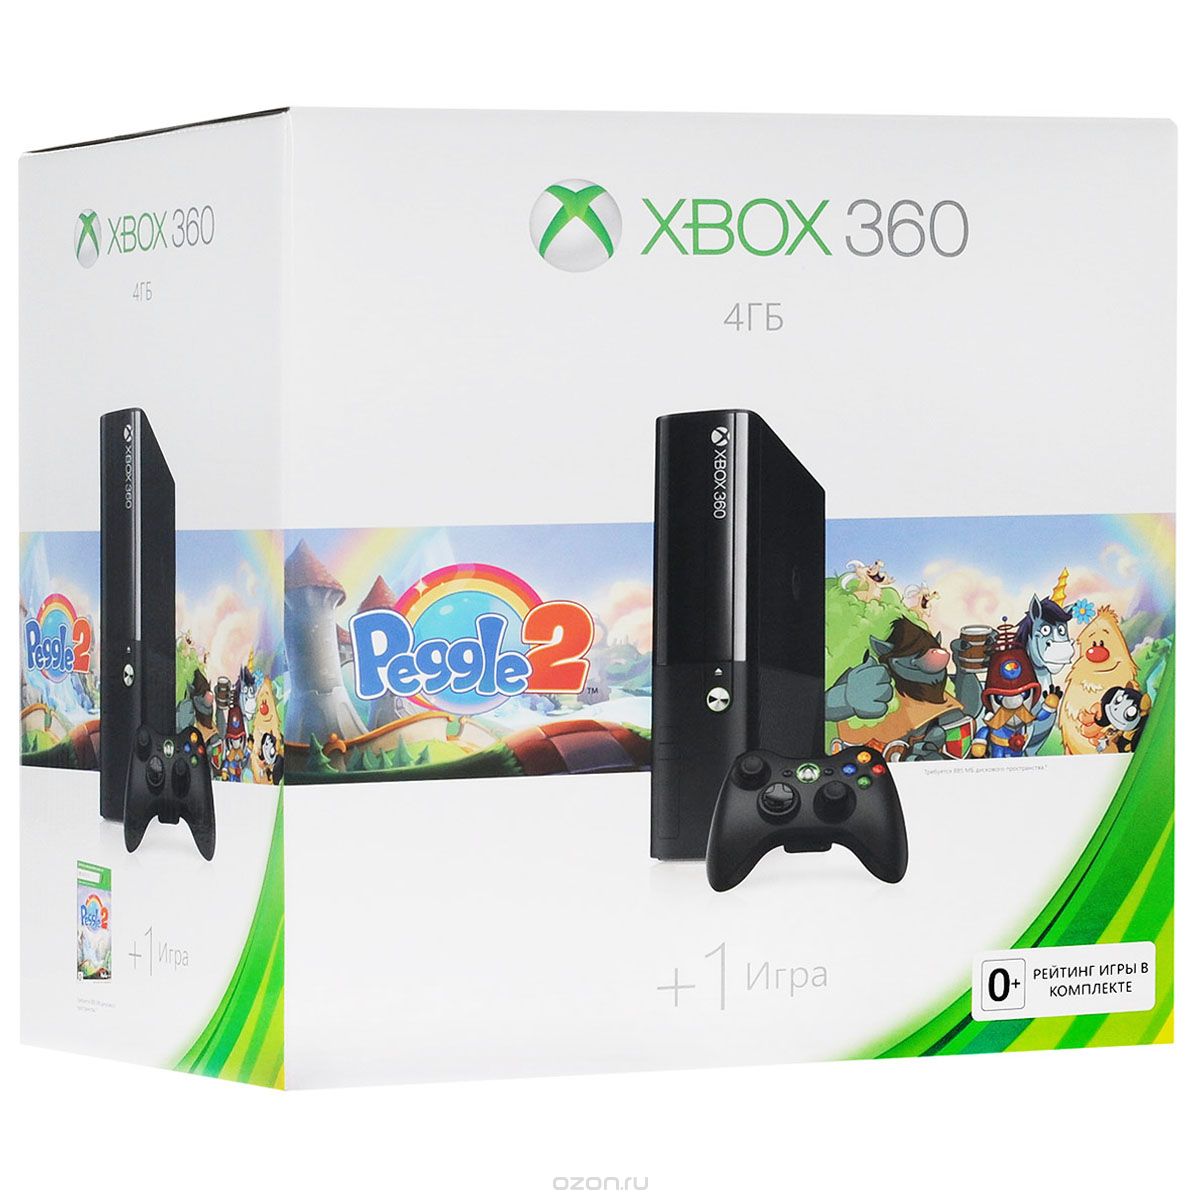 Купить Игровая приставка Microsoft Xbox 360 E (4 ГБ) + «Peggle 2» + Xbox LIVE Gold (1 месяц) + Forza Horizon 2 в подарок